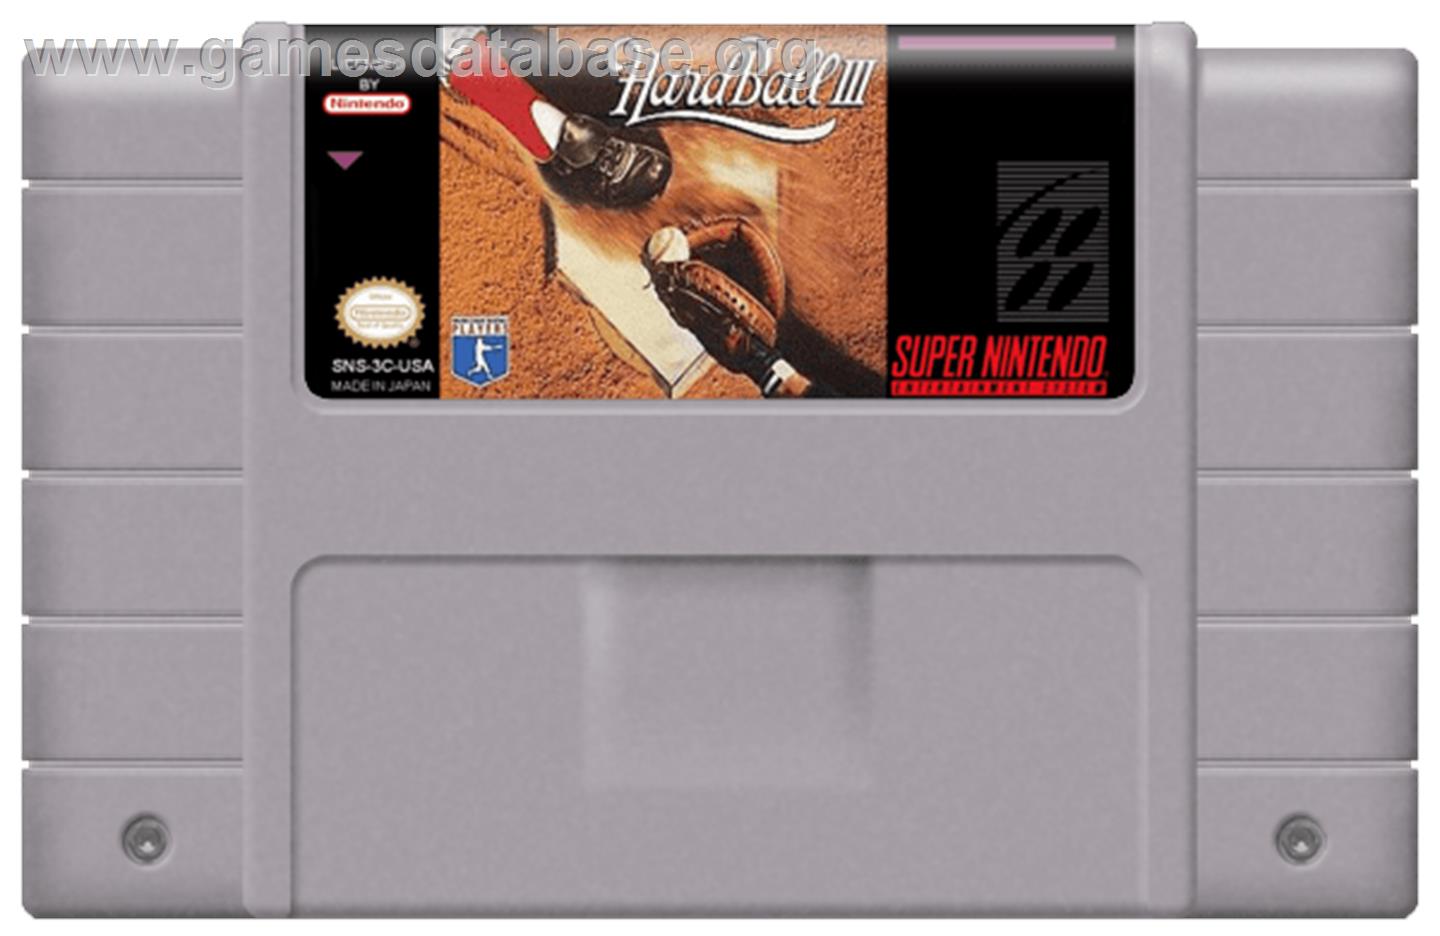 HardBall III - Nintendo SNES - Artwork - Cartridge